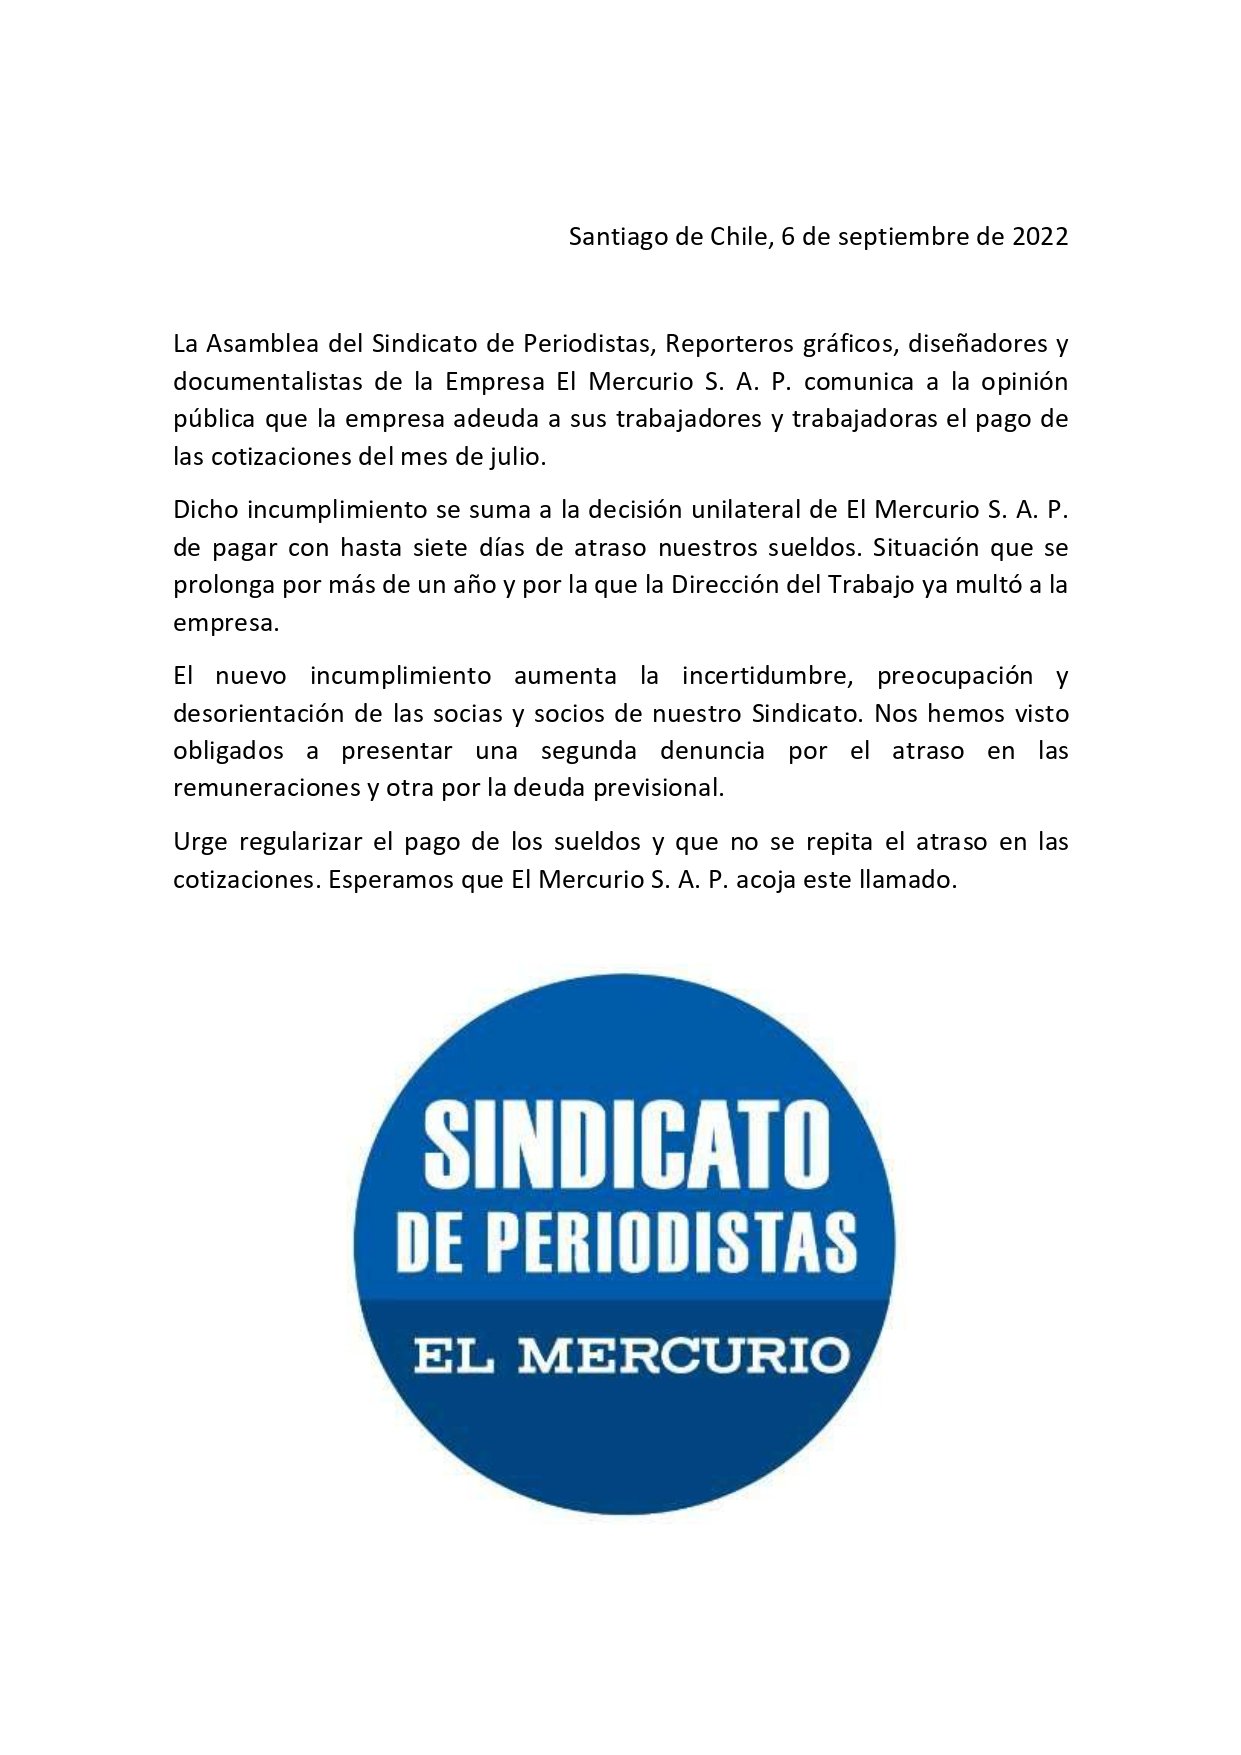 Sindicato de Periodistas de El Mercurio (@Sind_Per_EM) / Twitter